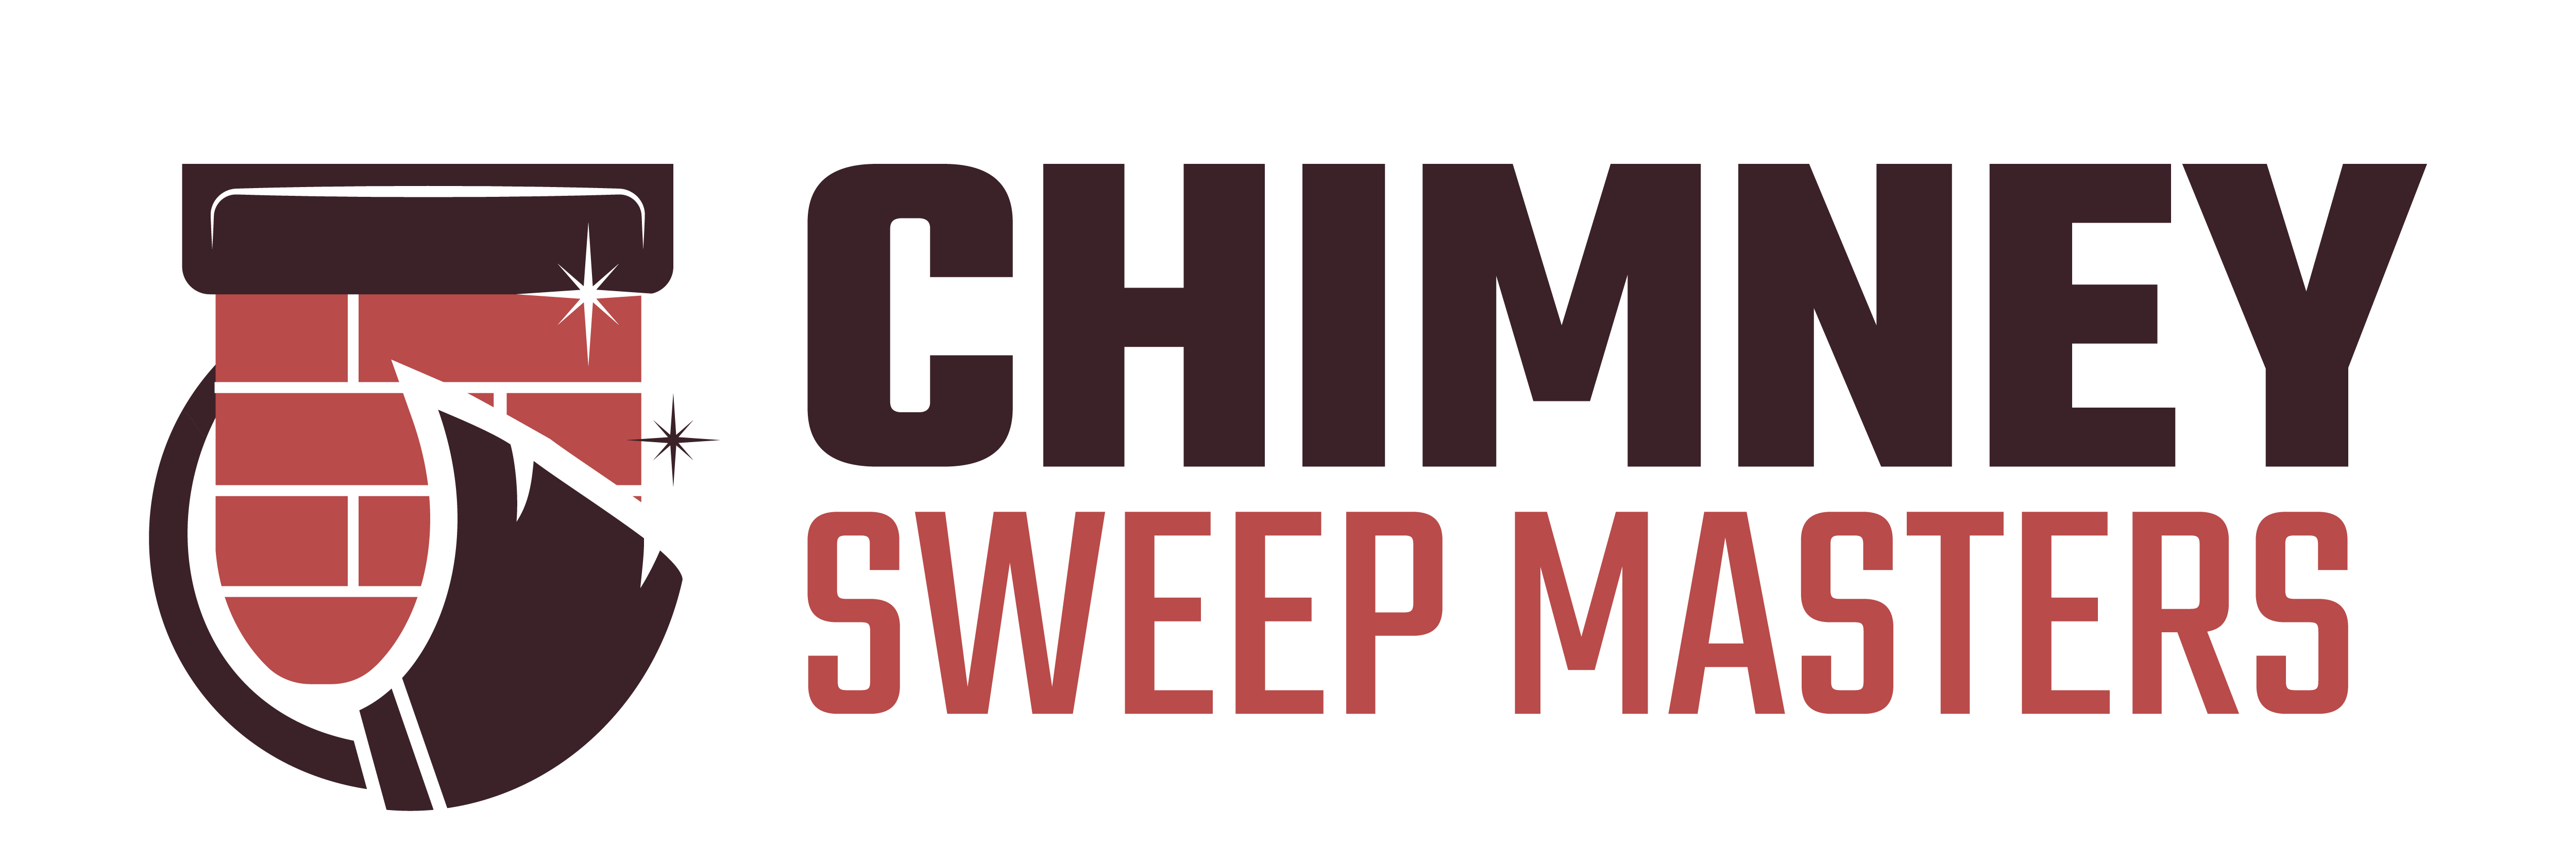 Chimney Sweep Masters Riverside Logo